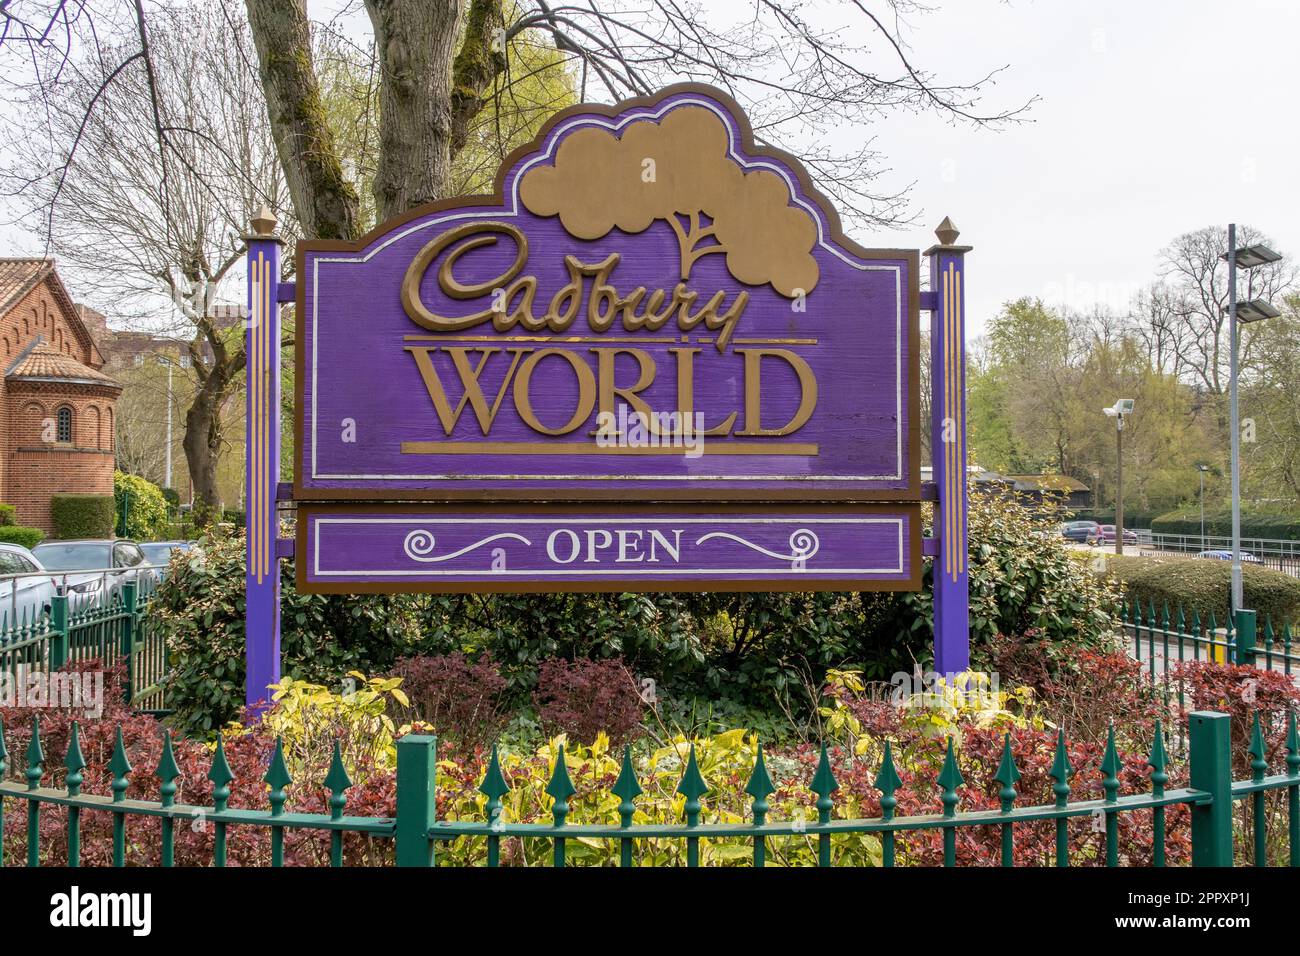 A vibrant purple sign with text: Cadbury World. Stock Photo